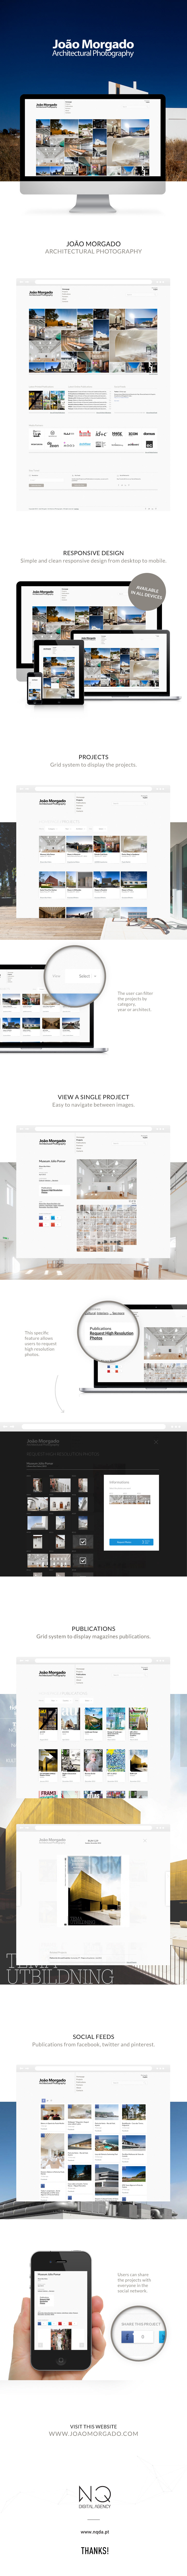 João Morgado Architecture Photography Layout clean simple Responsive Responsive Design NQDA digital digital agency